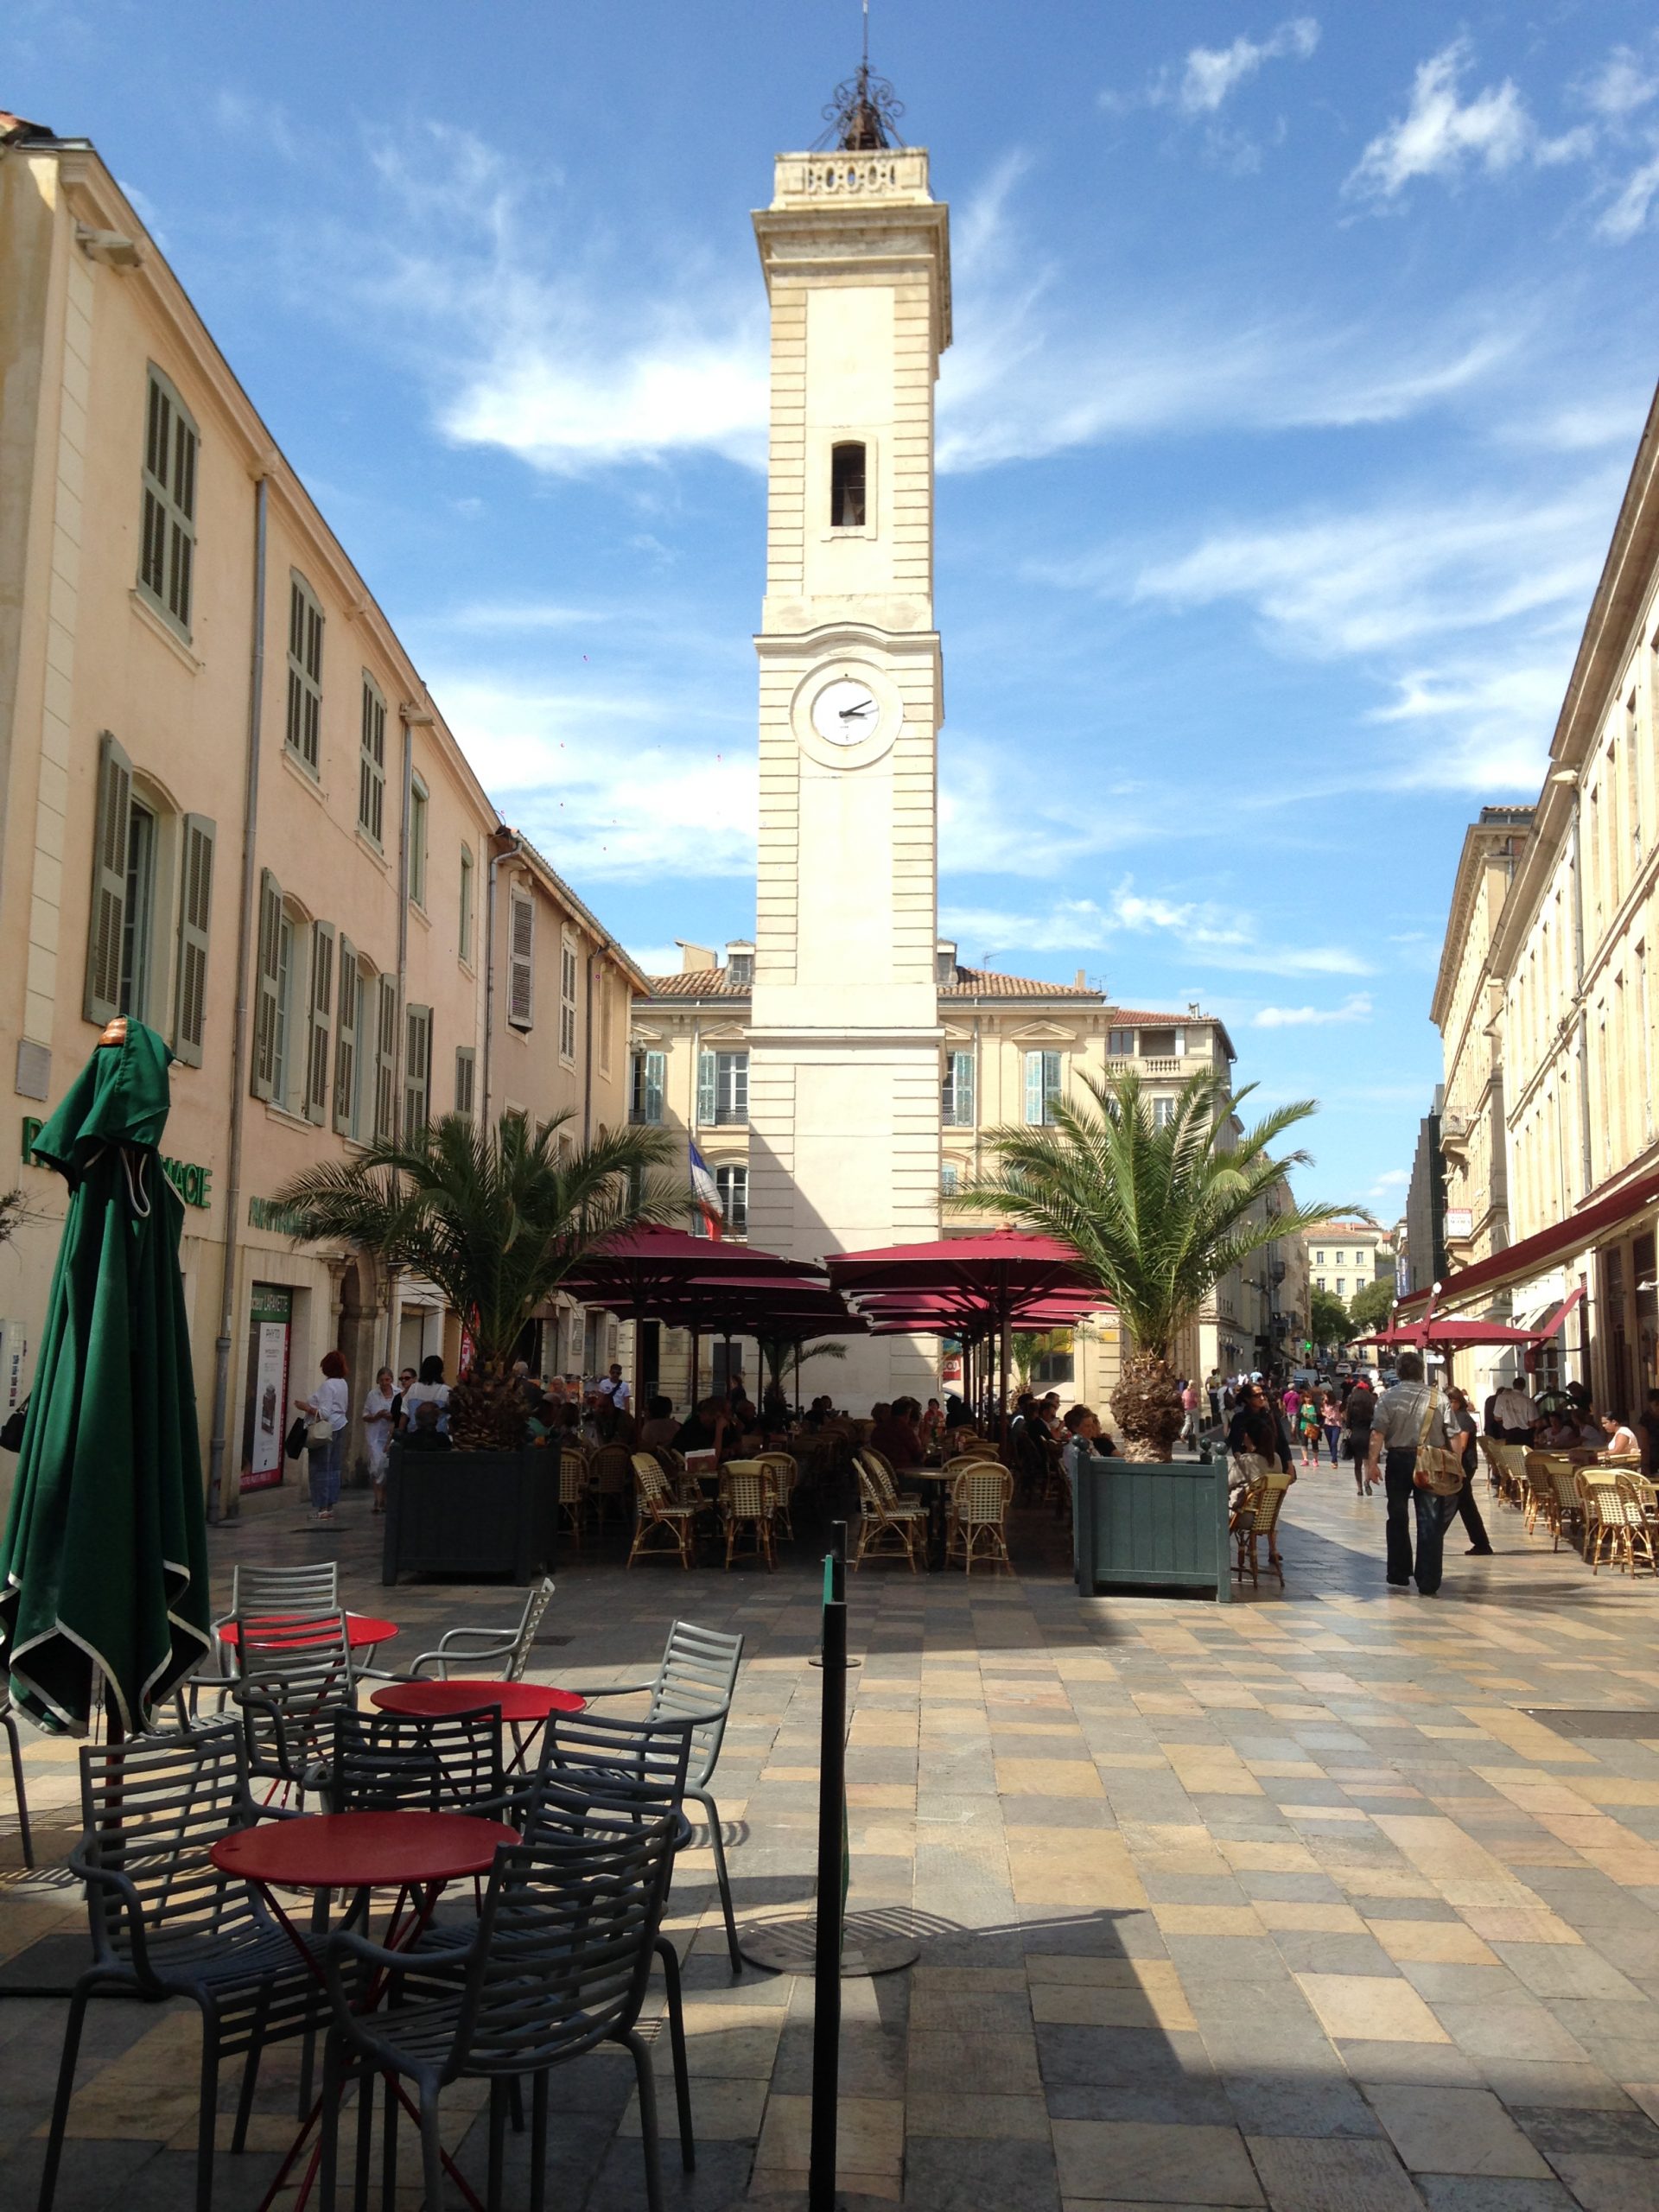 Plae de l'horloge, Nimes - The South of France